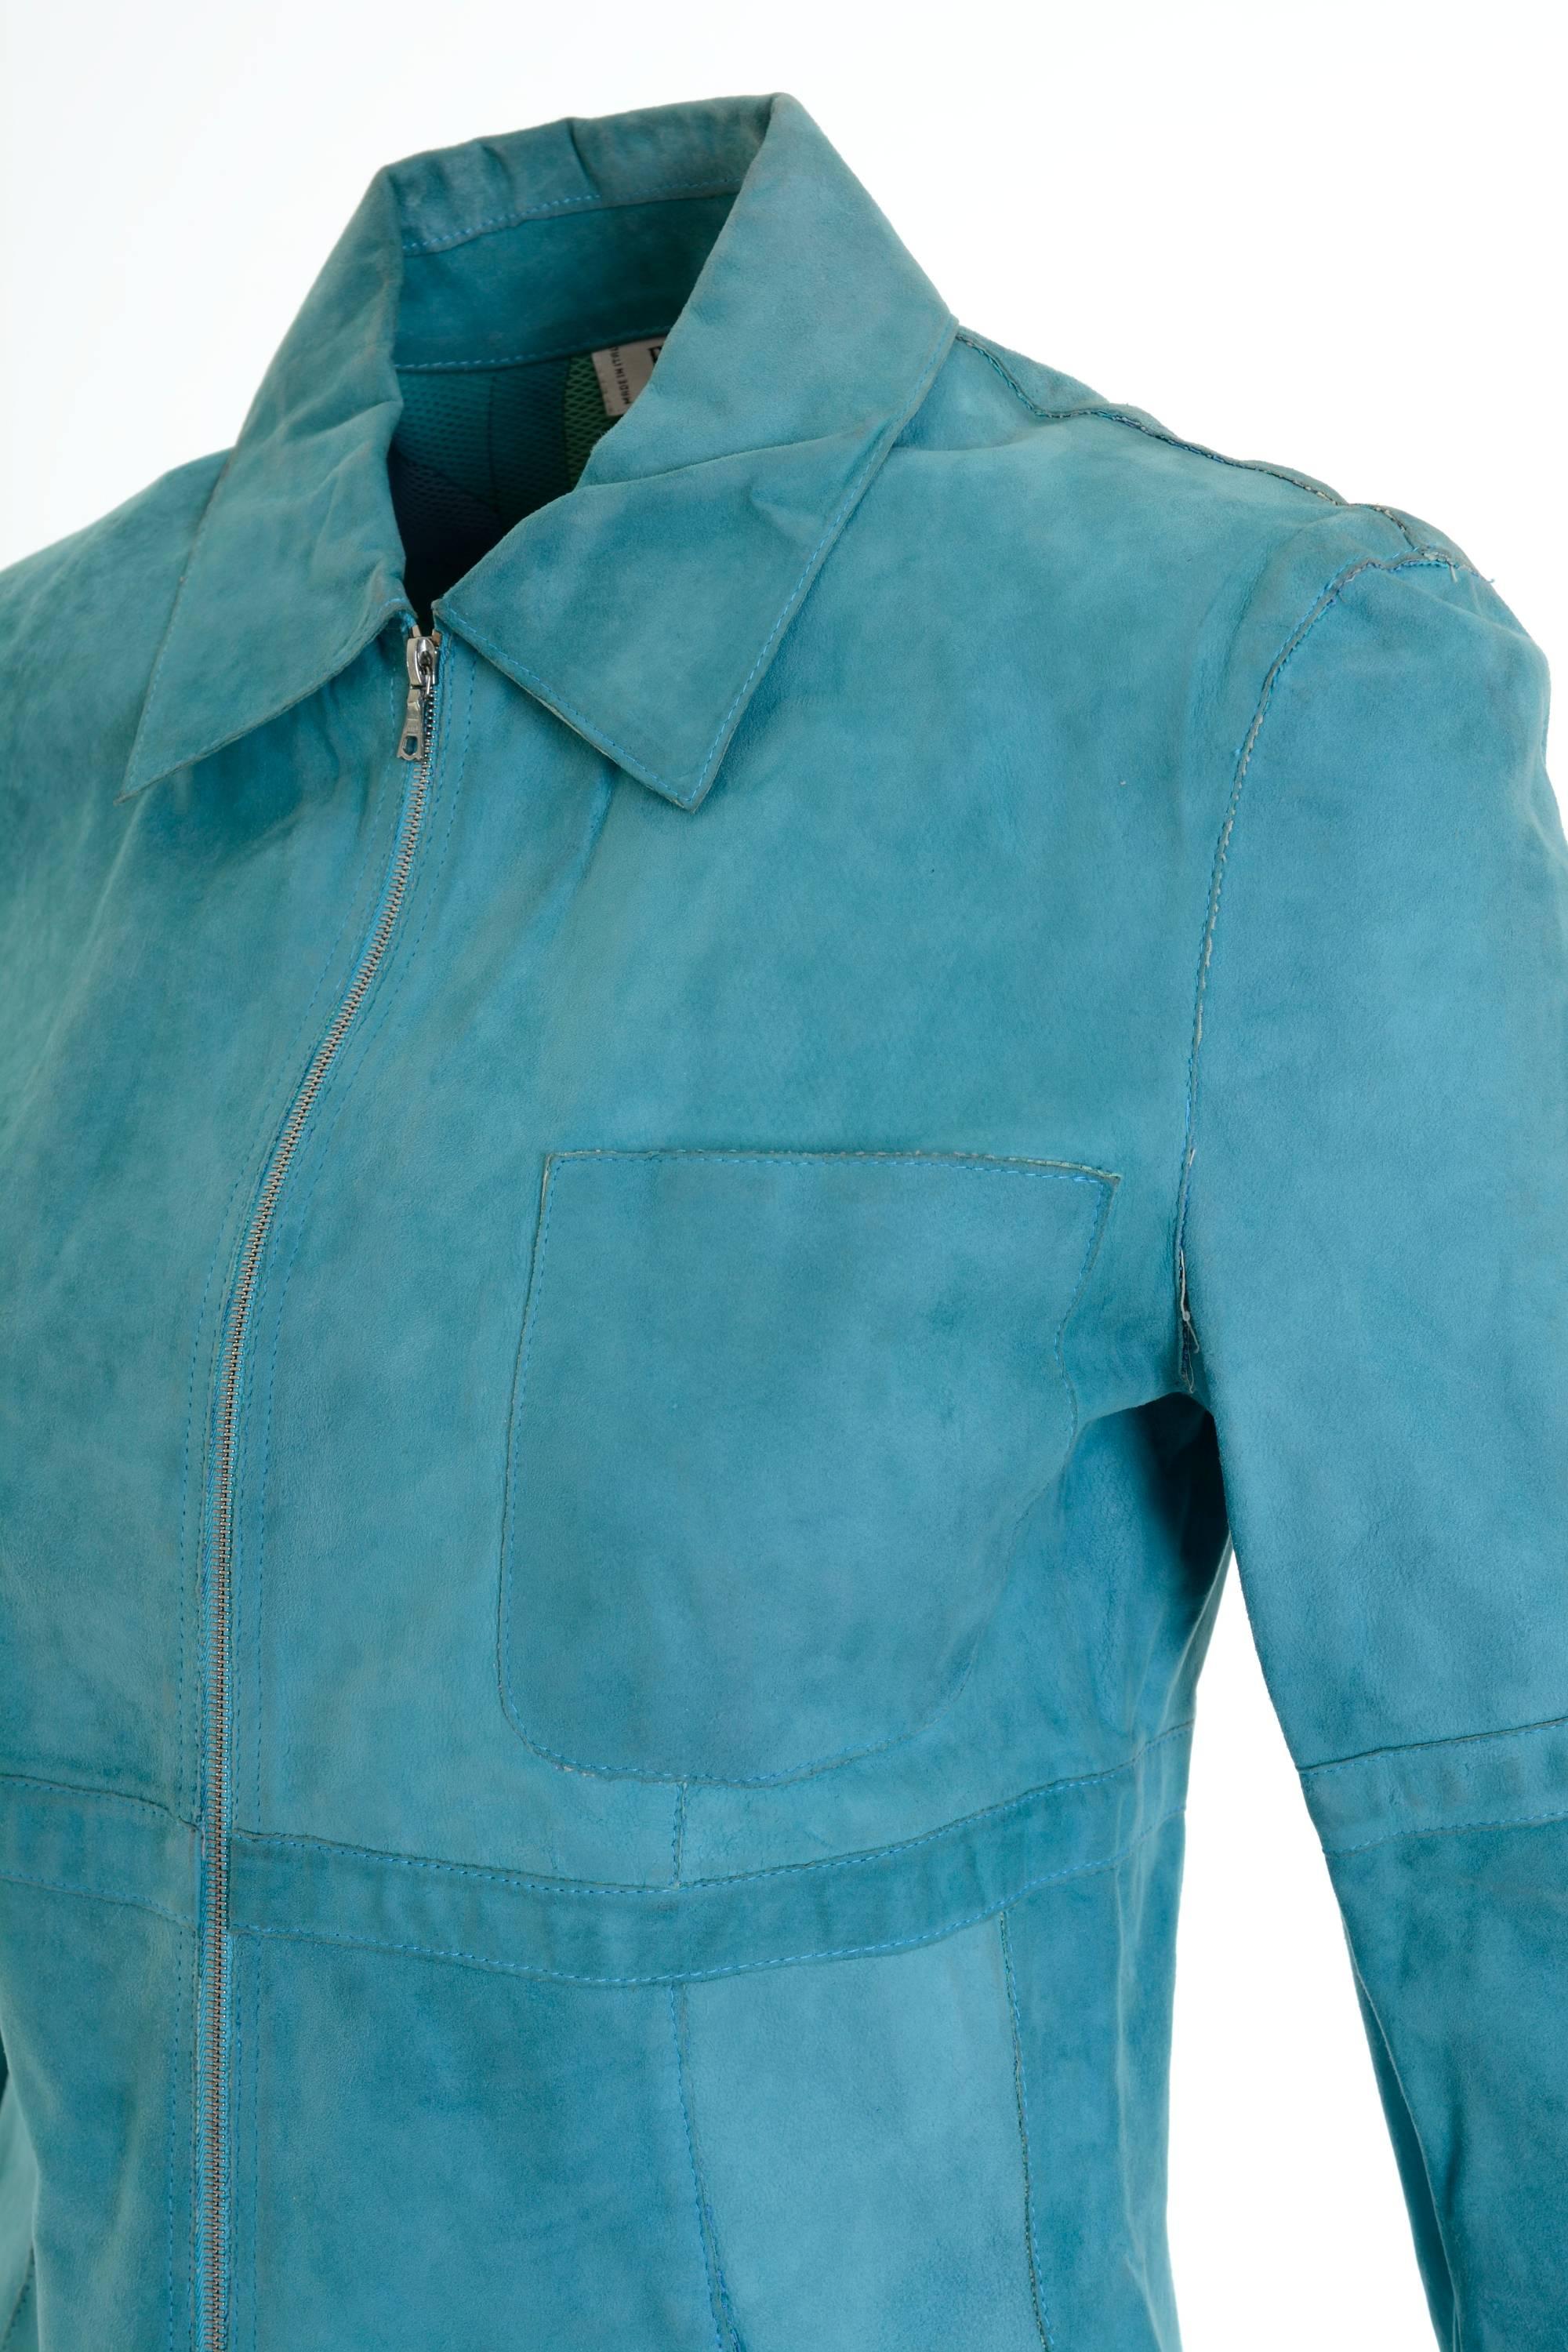 Blue EMILIO PUCCI Suede Leather Jacket For Sale